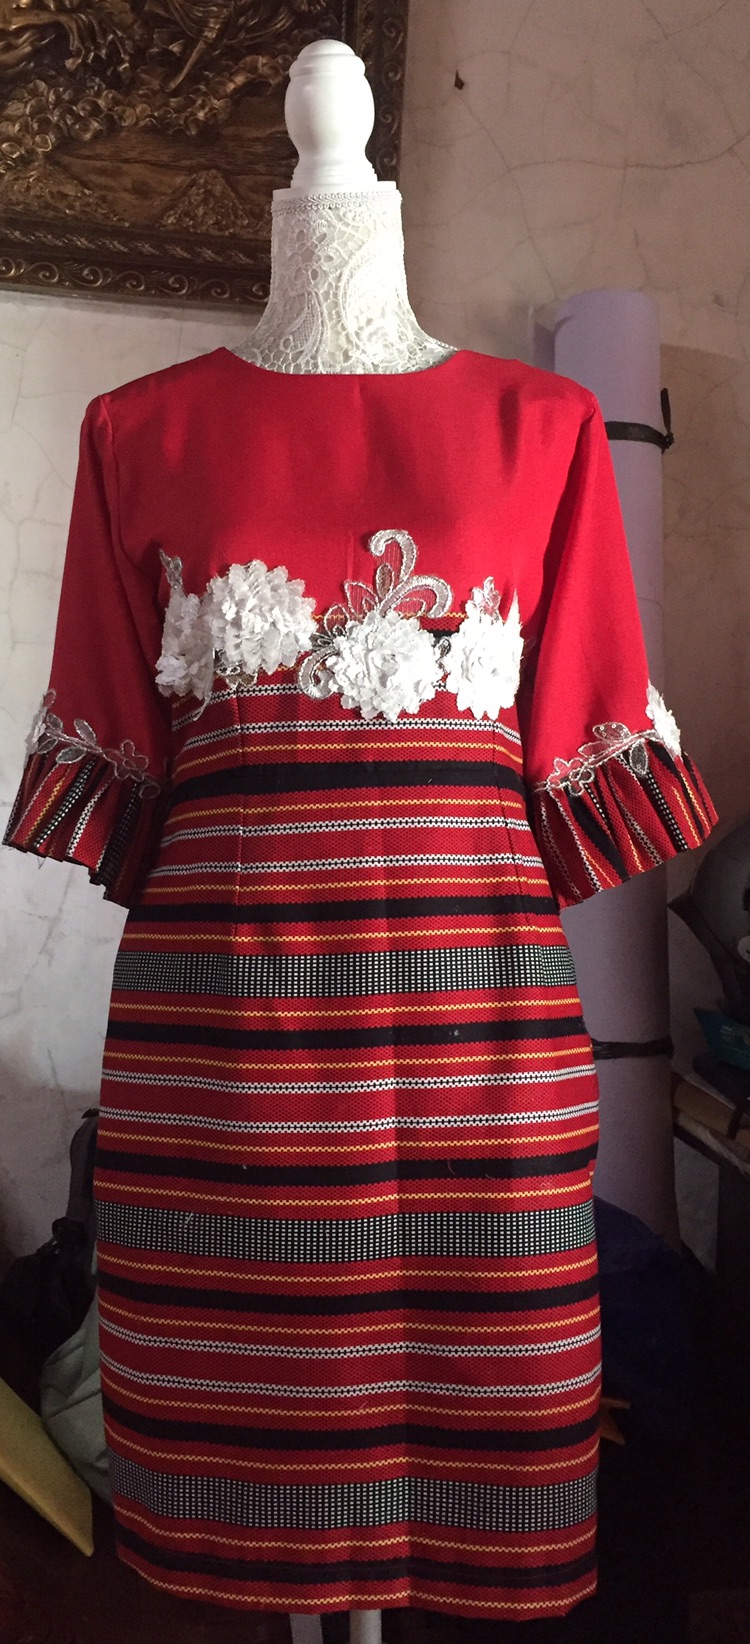 Dresses Online - Low Price Offer on Dresses for Women at Myntra-megaelearning.vn